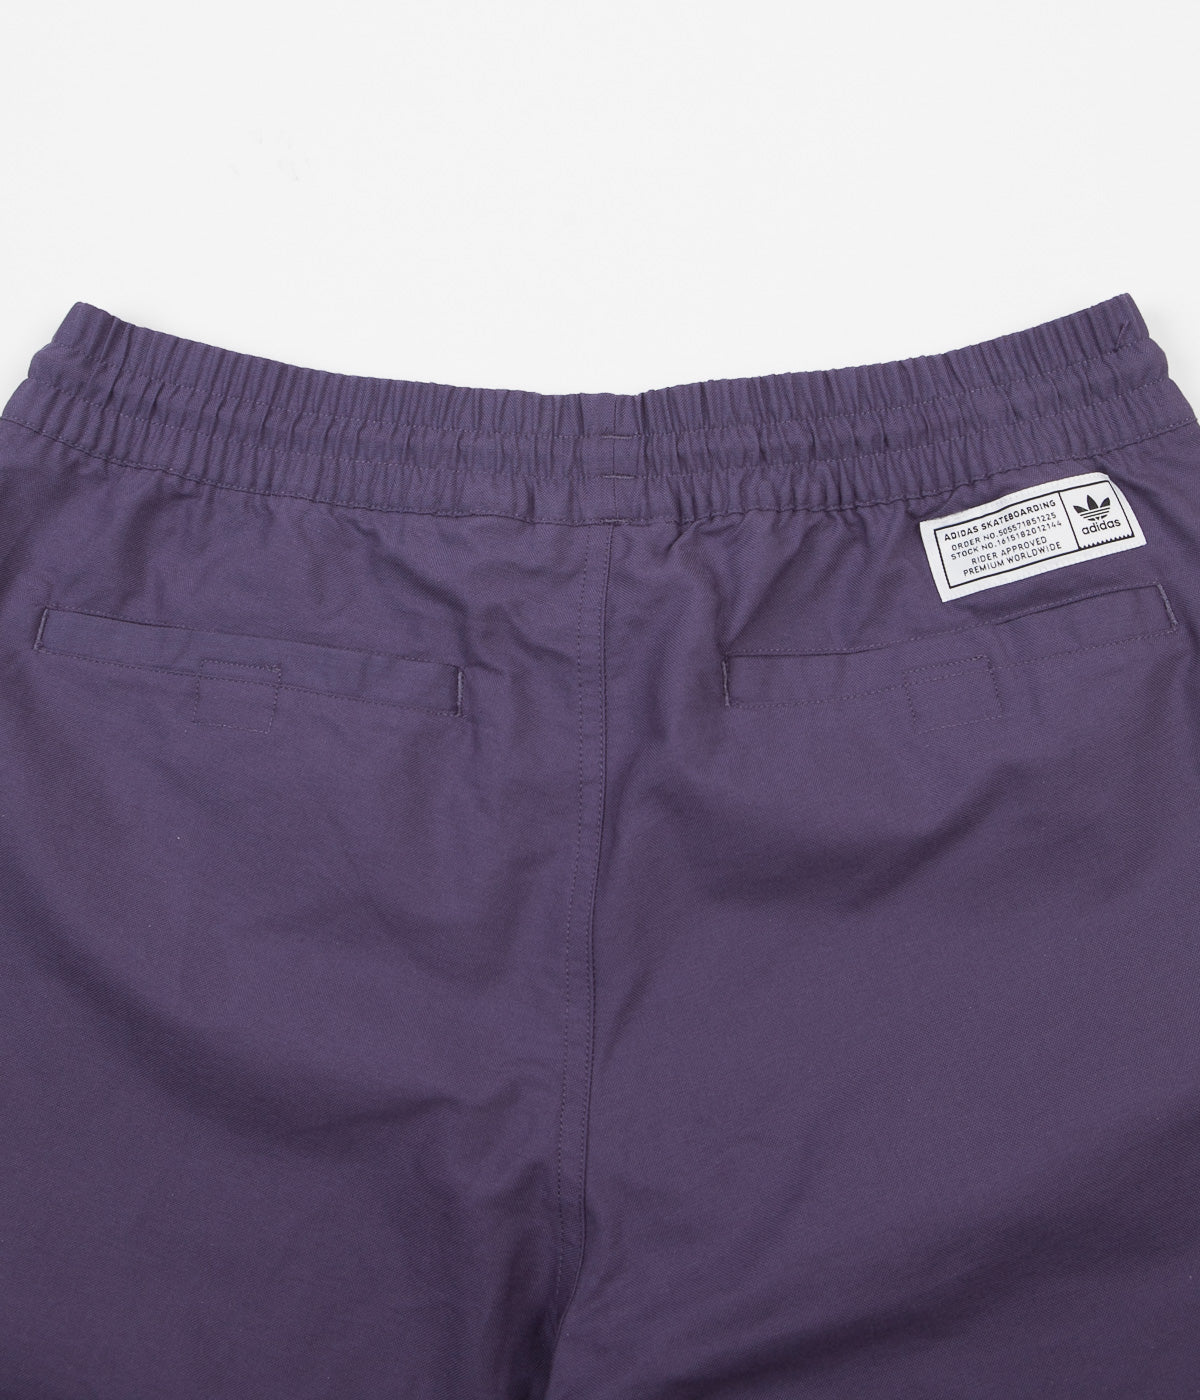 adidas Originals Dakari Men Pants Trace Purple DY9495 Large  eBay